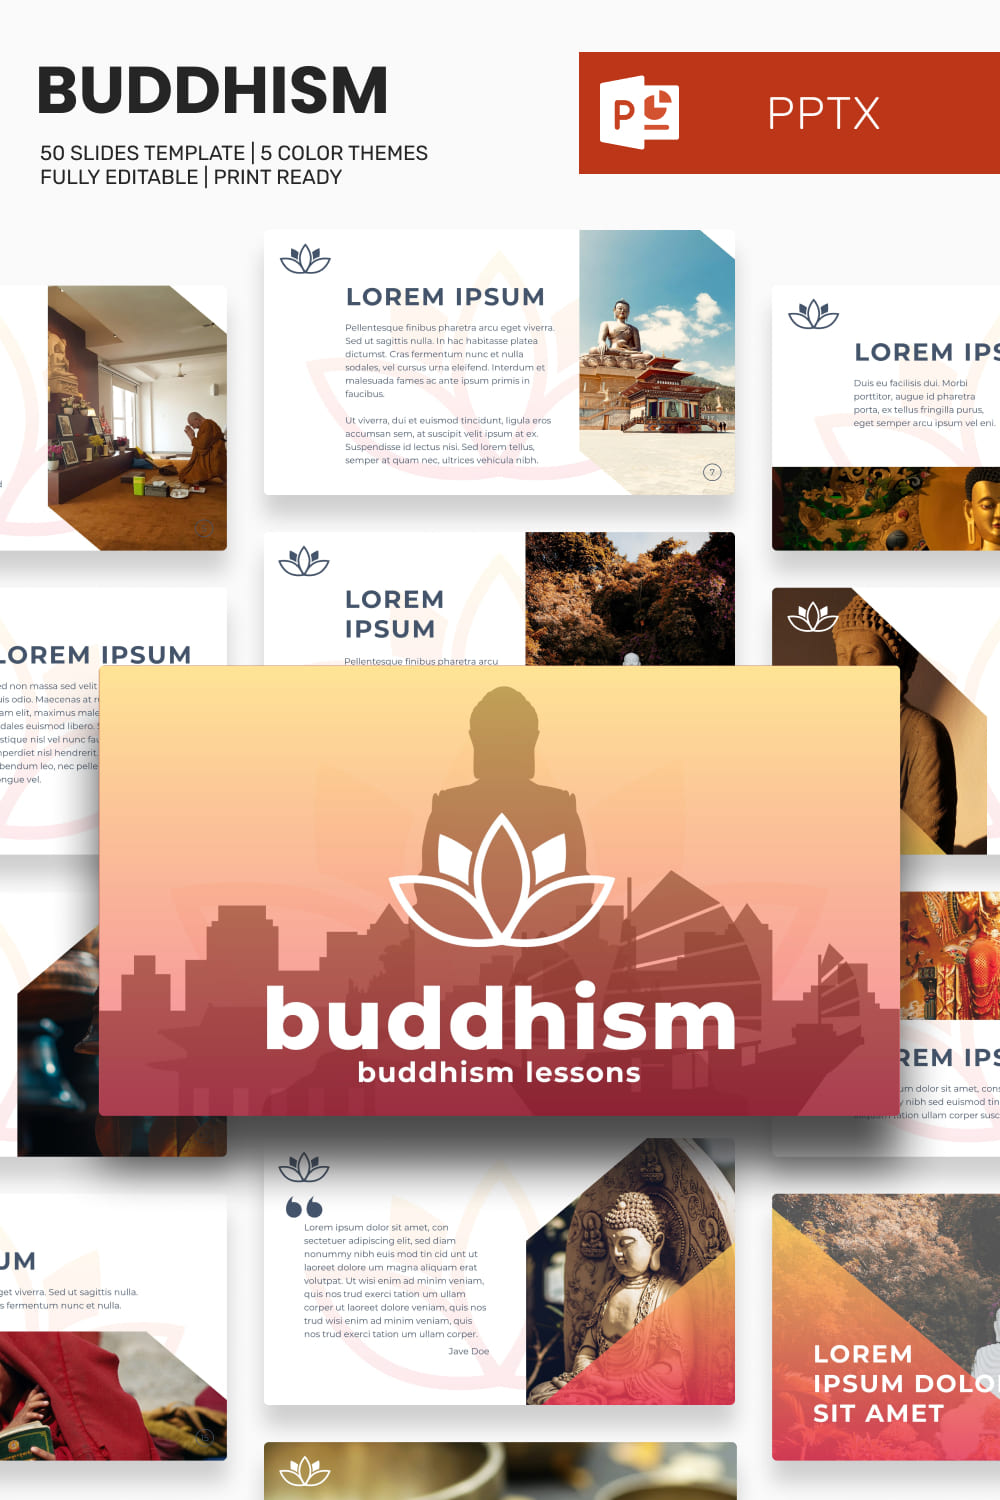 Buddhism Presentation PowerPoint template.